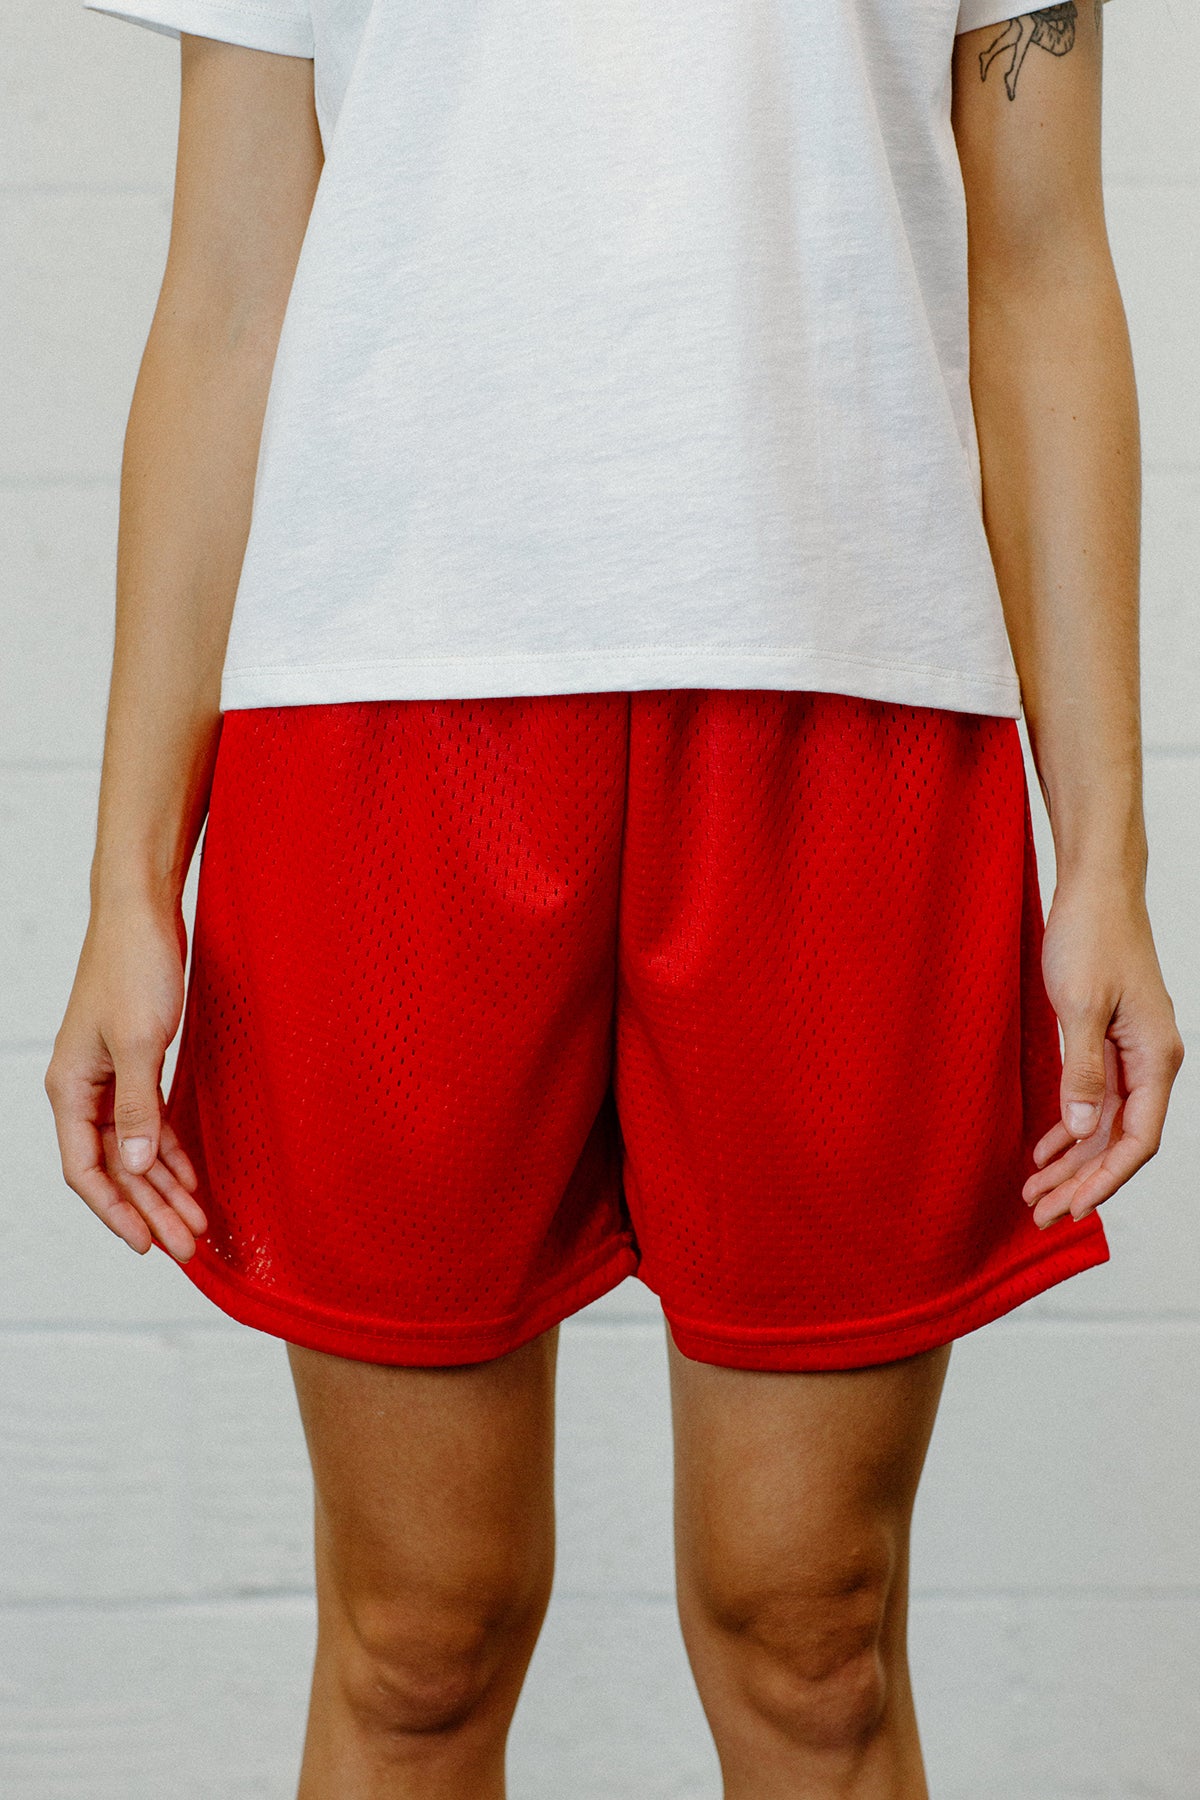 MSPP054 - Unisex Mesh Gym Shorts - Red